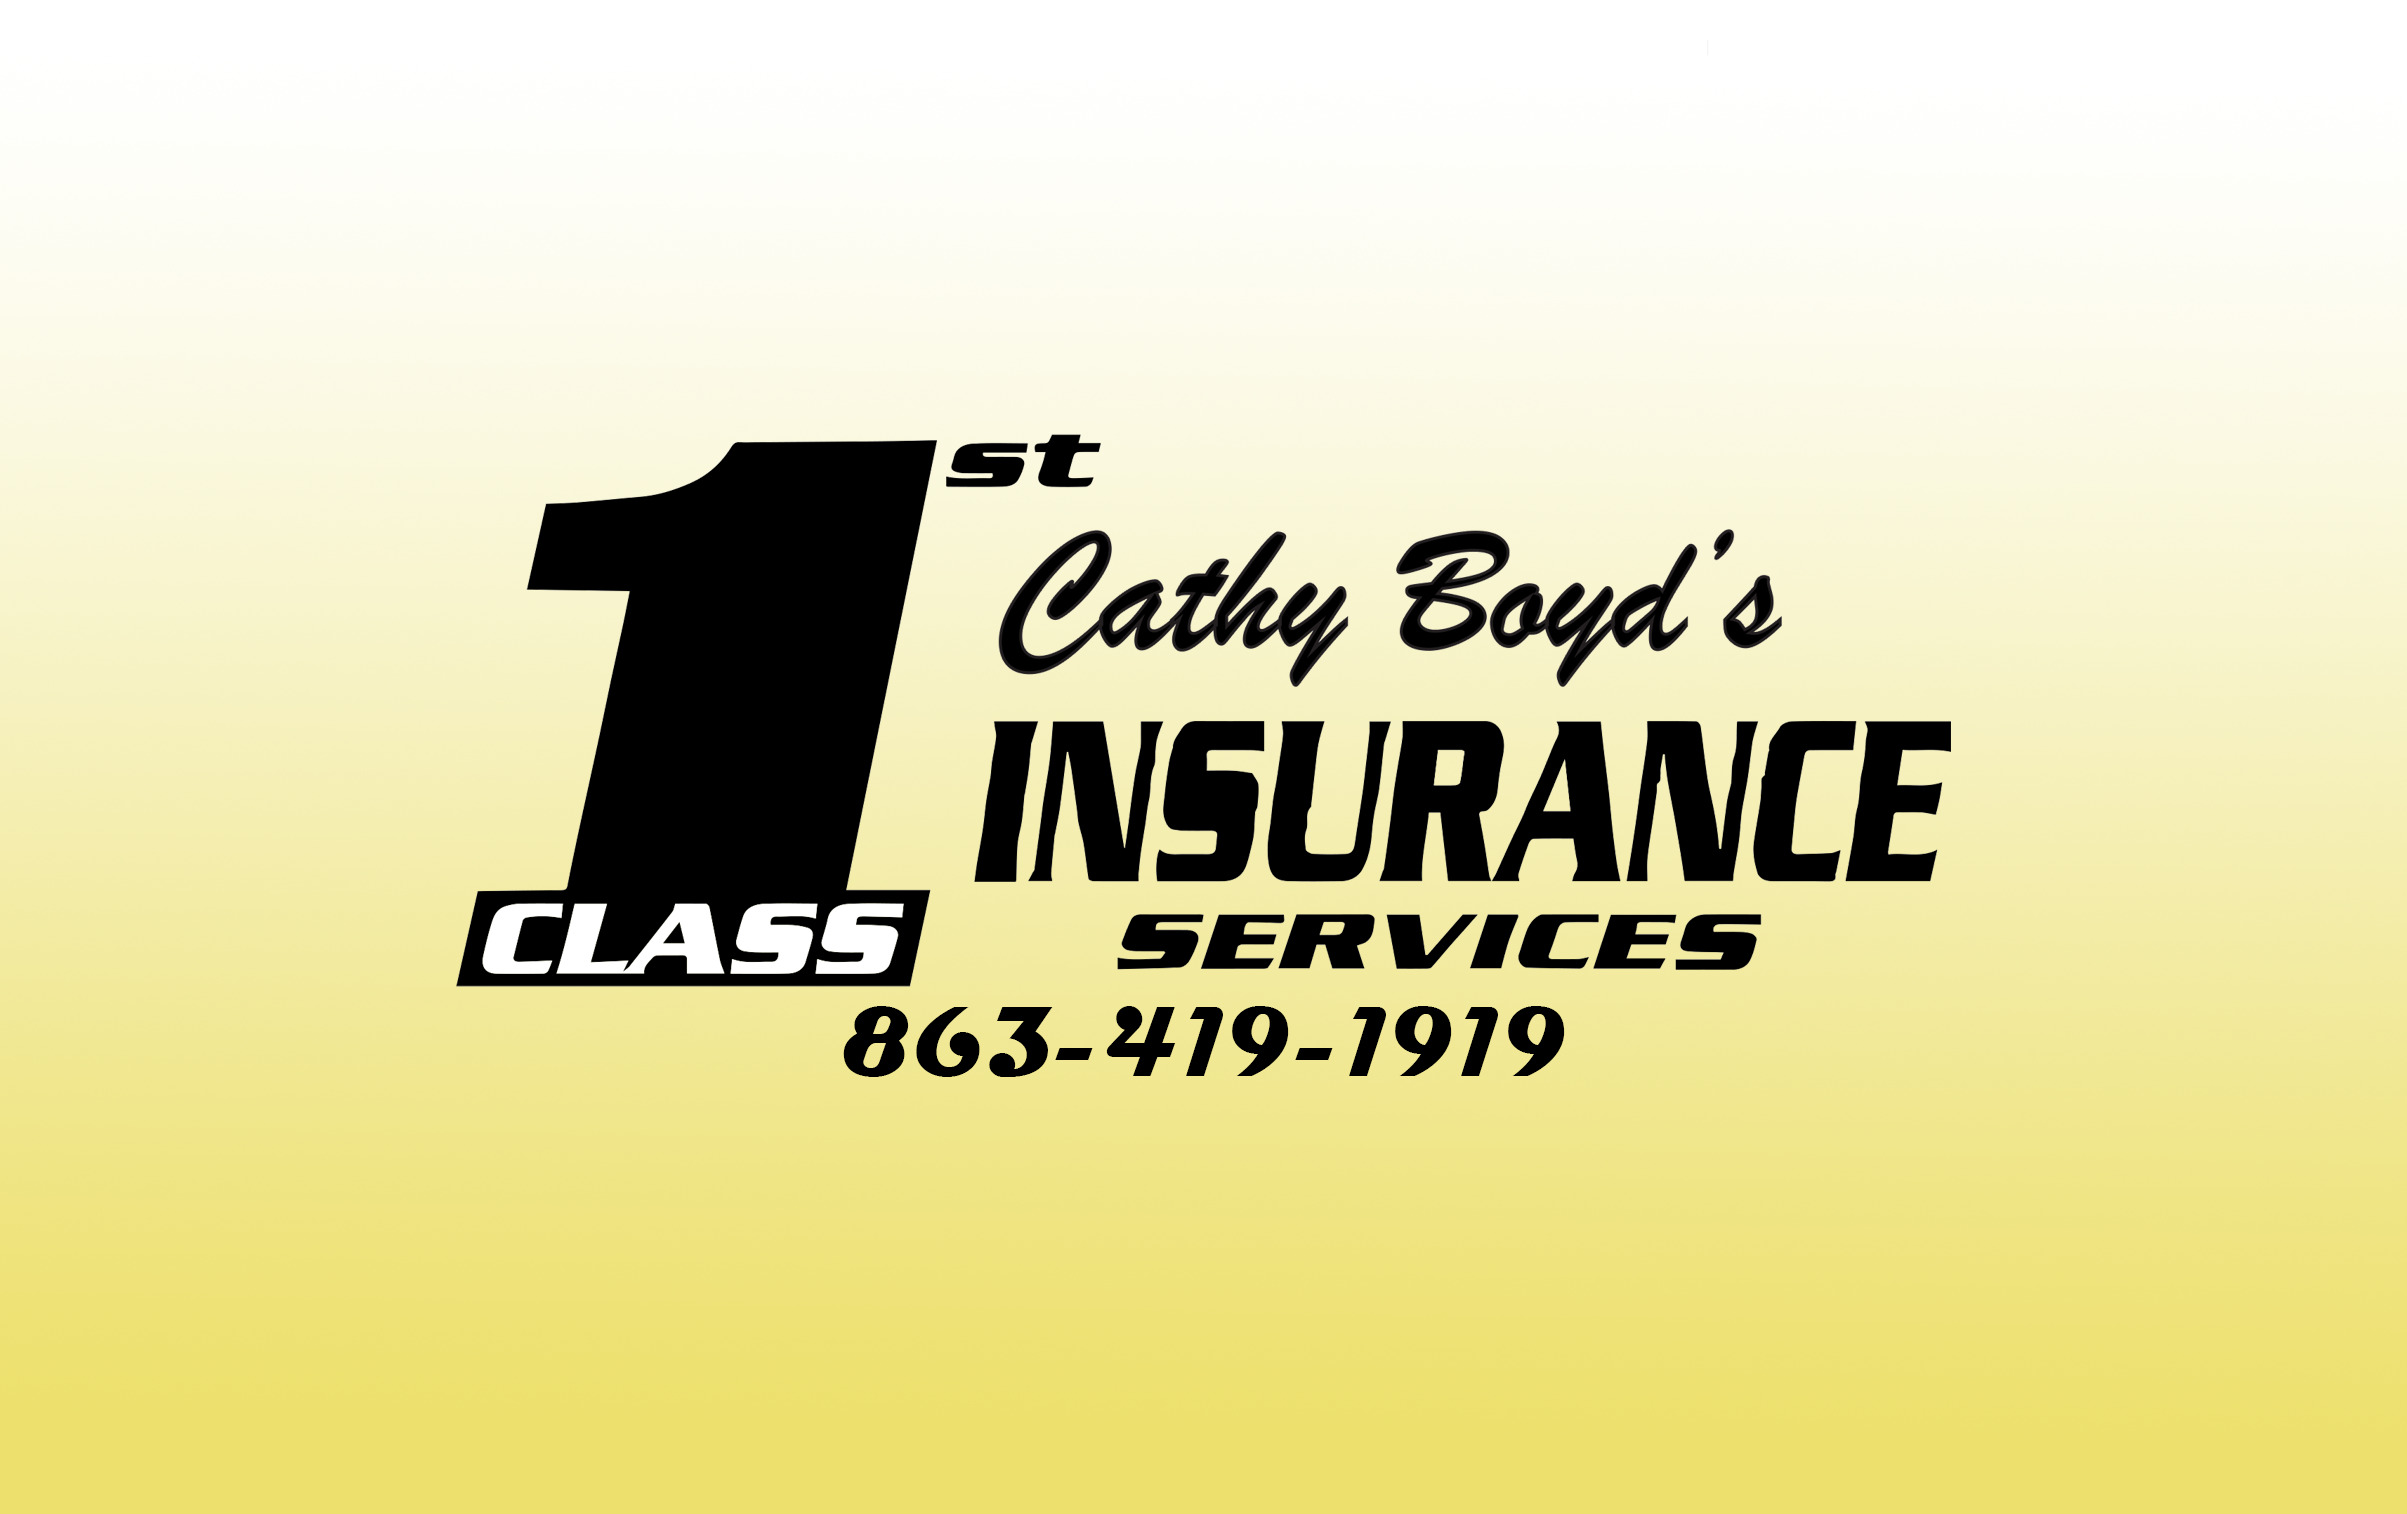 1st Class Insurance Services, LLC dba Cathy Boyd’s Insurance Agency Logo